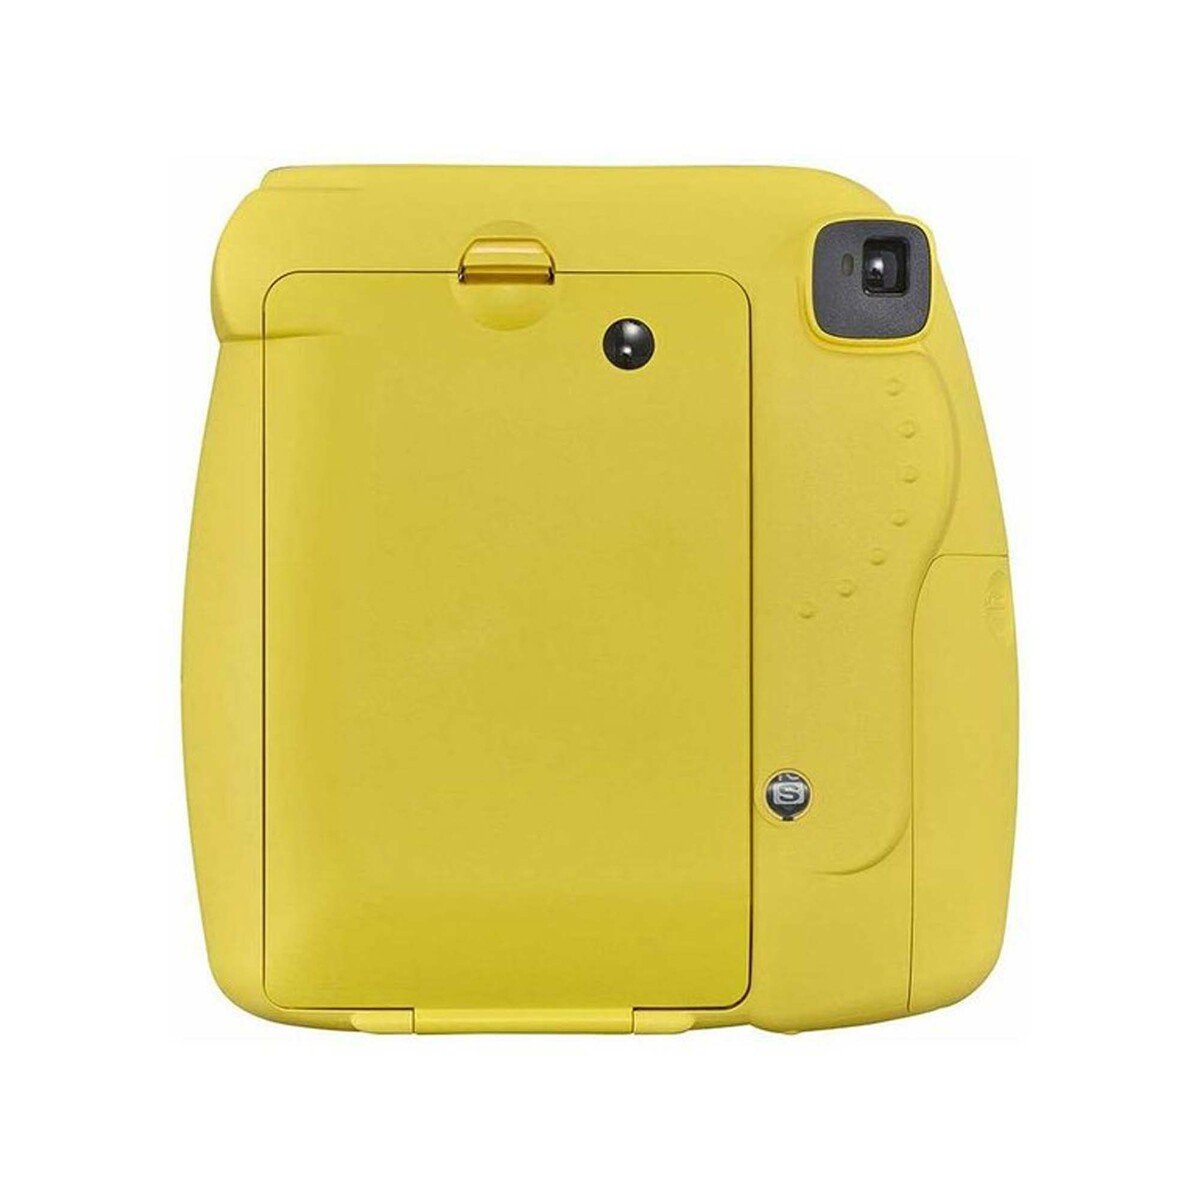 Fujifilm Instax Camera Mini 9 Clear Yellow